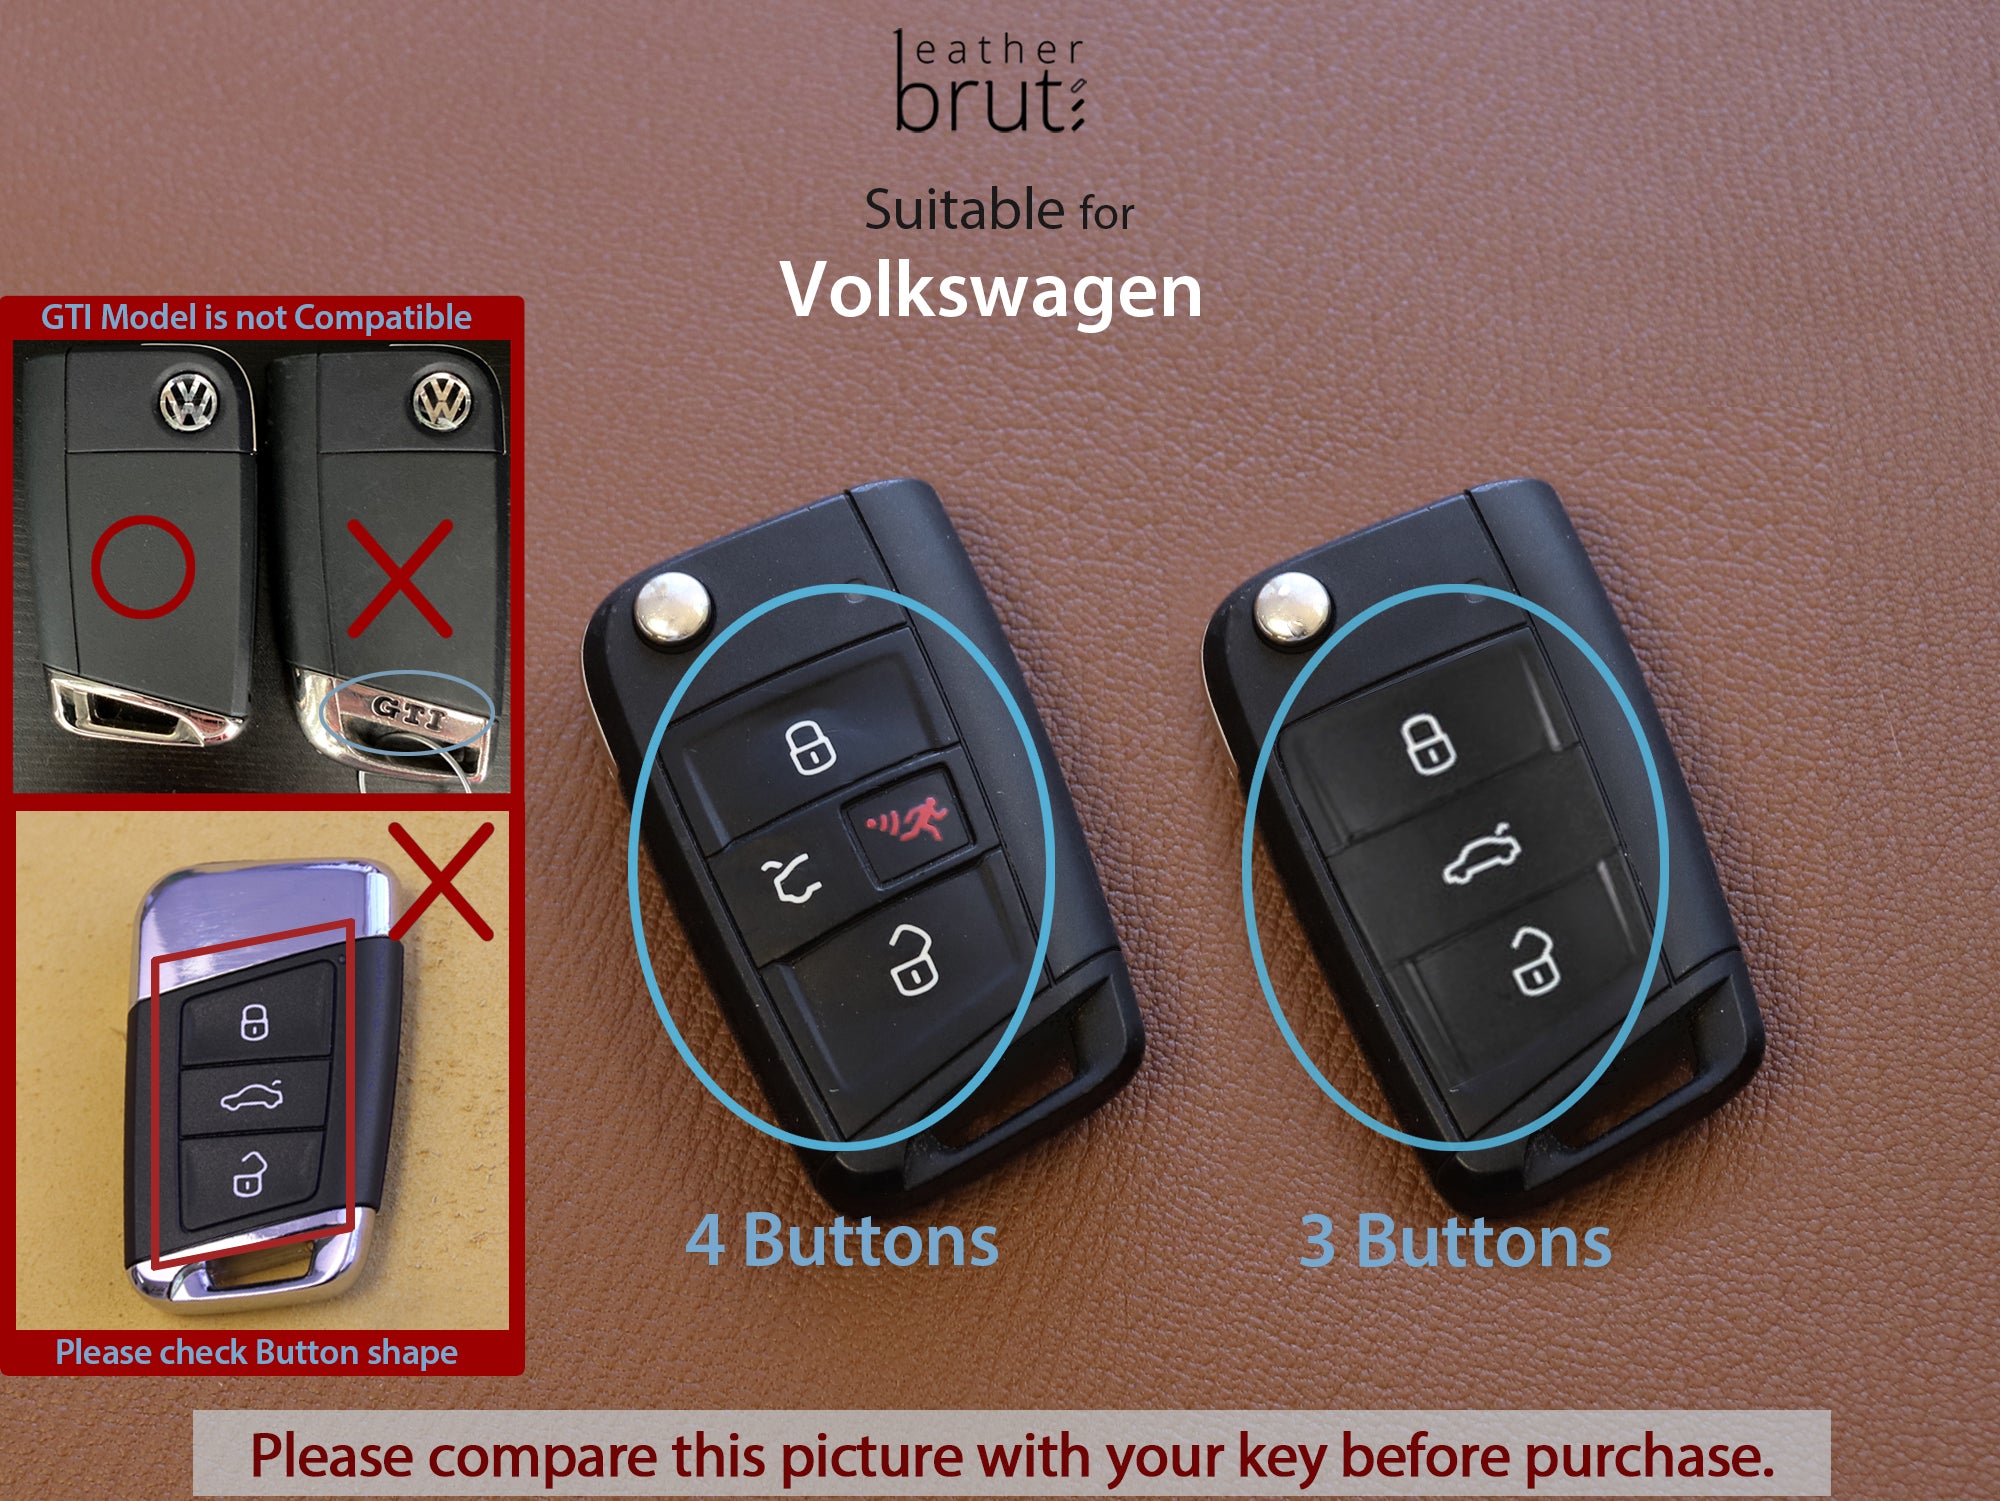 VW Key Fob Leather Case Fits GOLF MK7 - Leather Brut